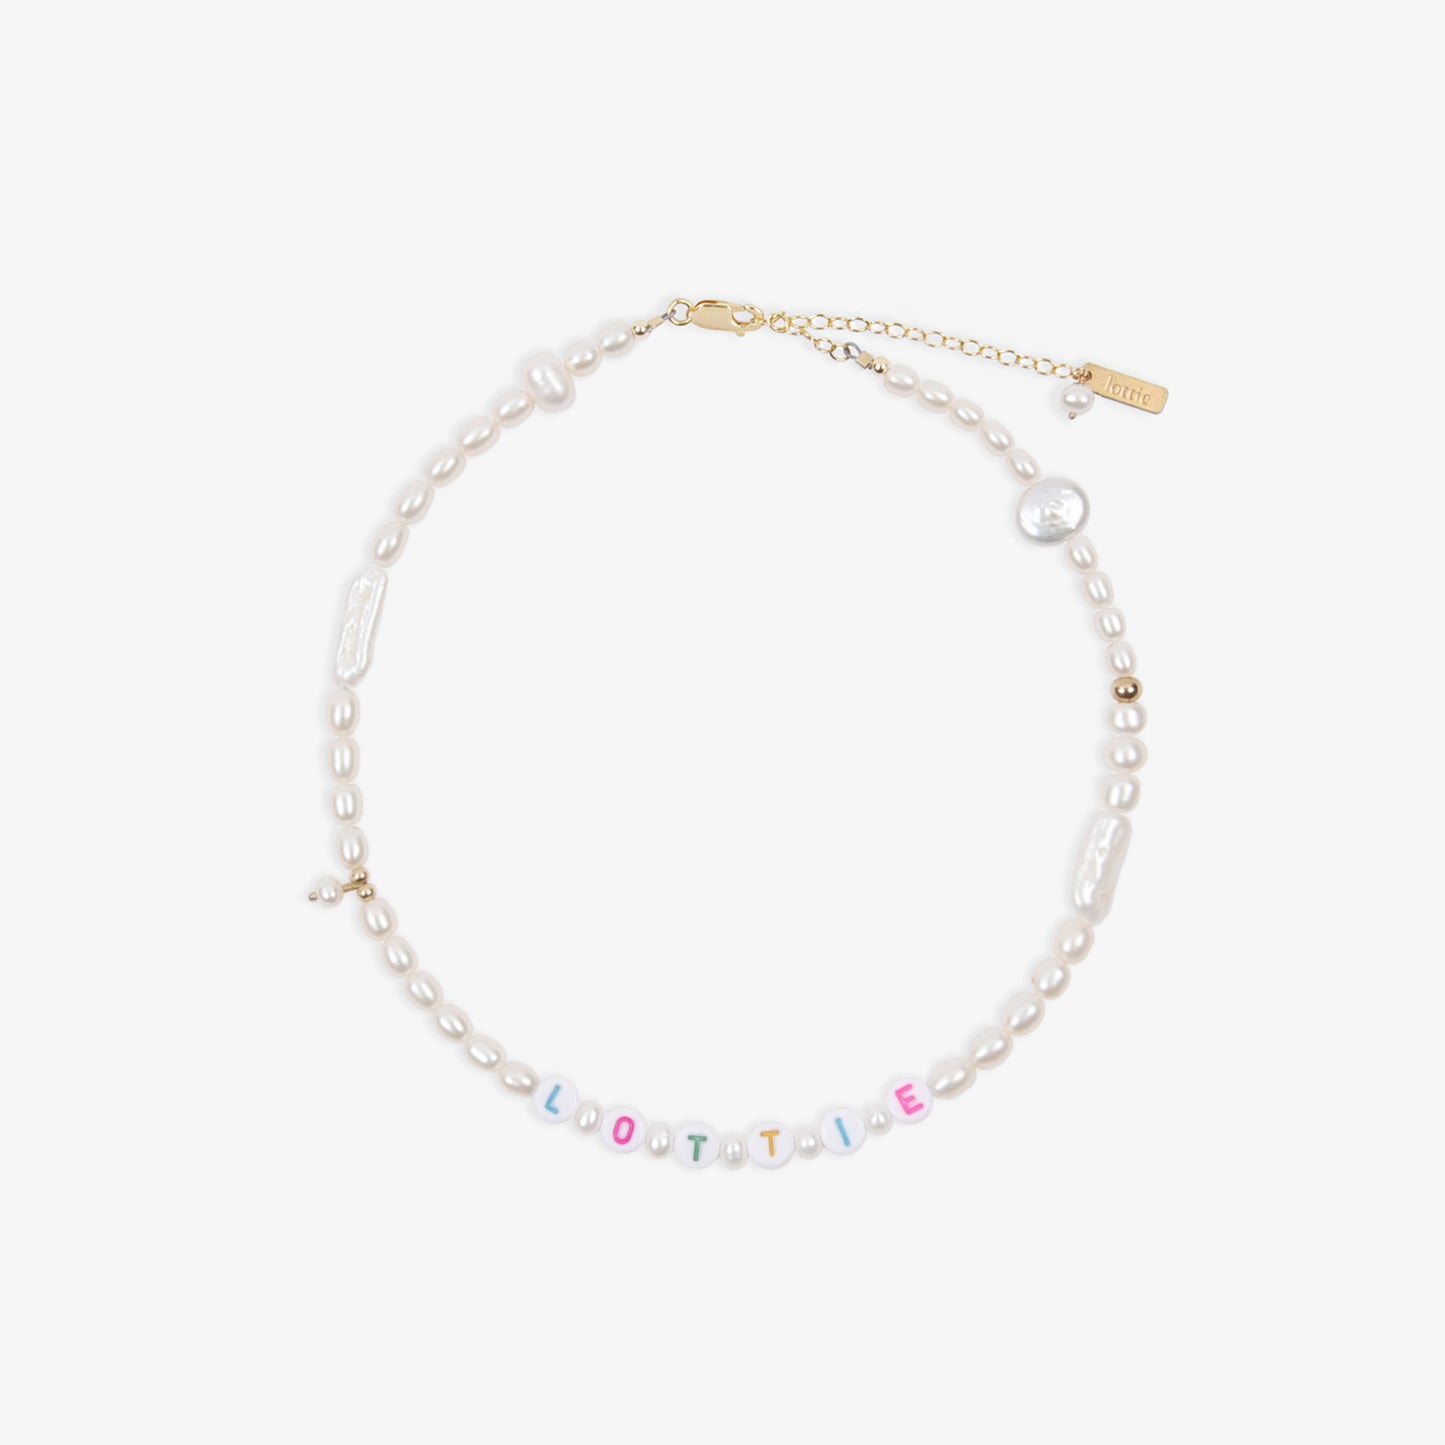 Gigi pearl necklace - customizable